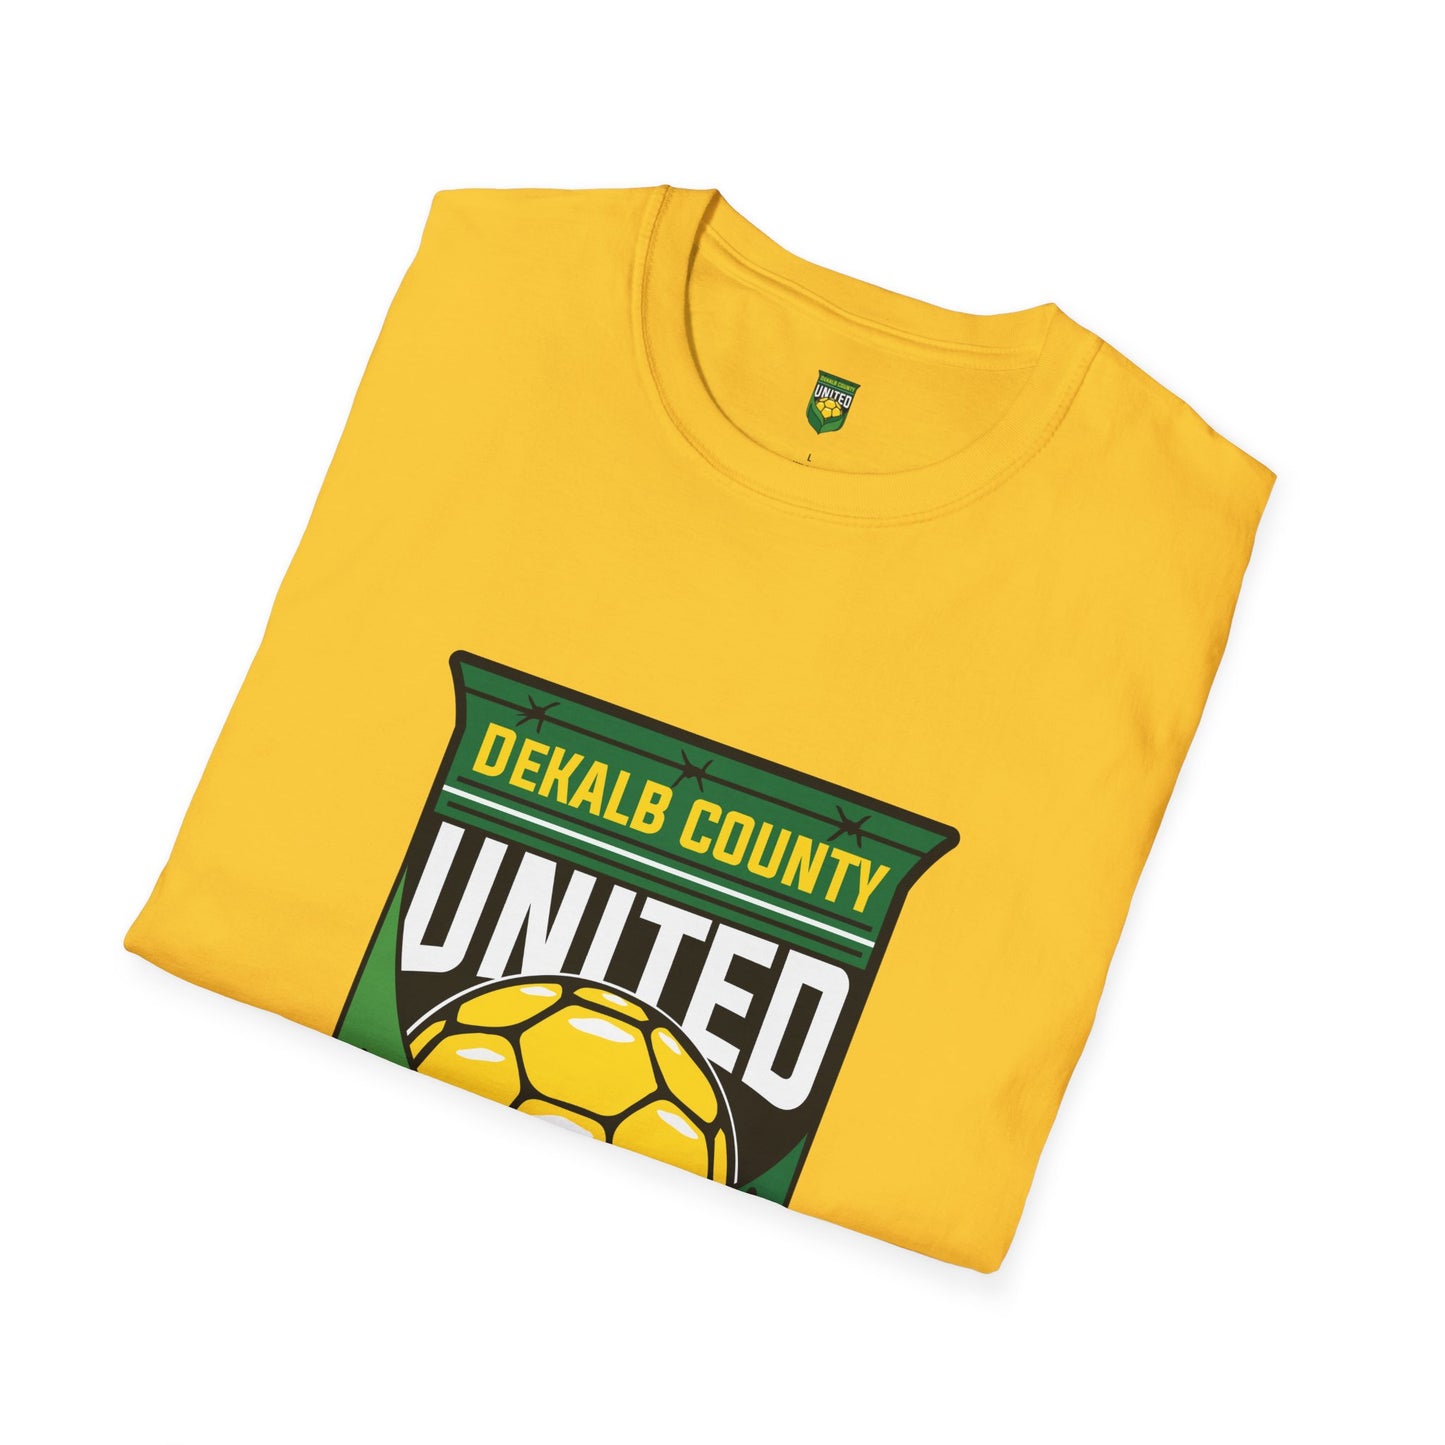 DKCU Unisex Softstyle T-Shirt